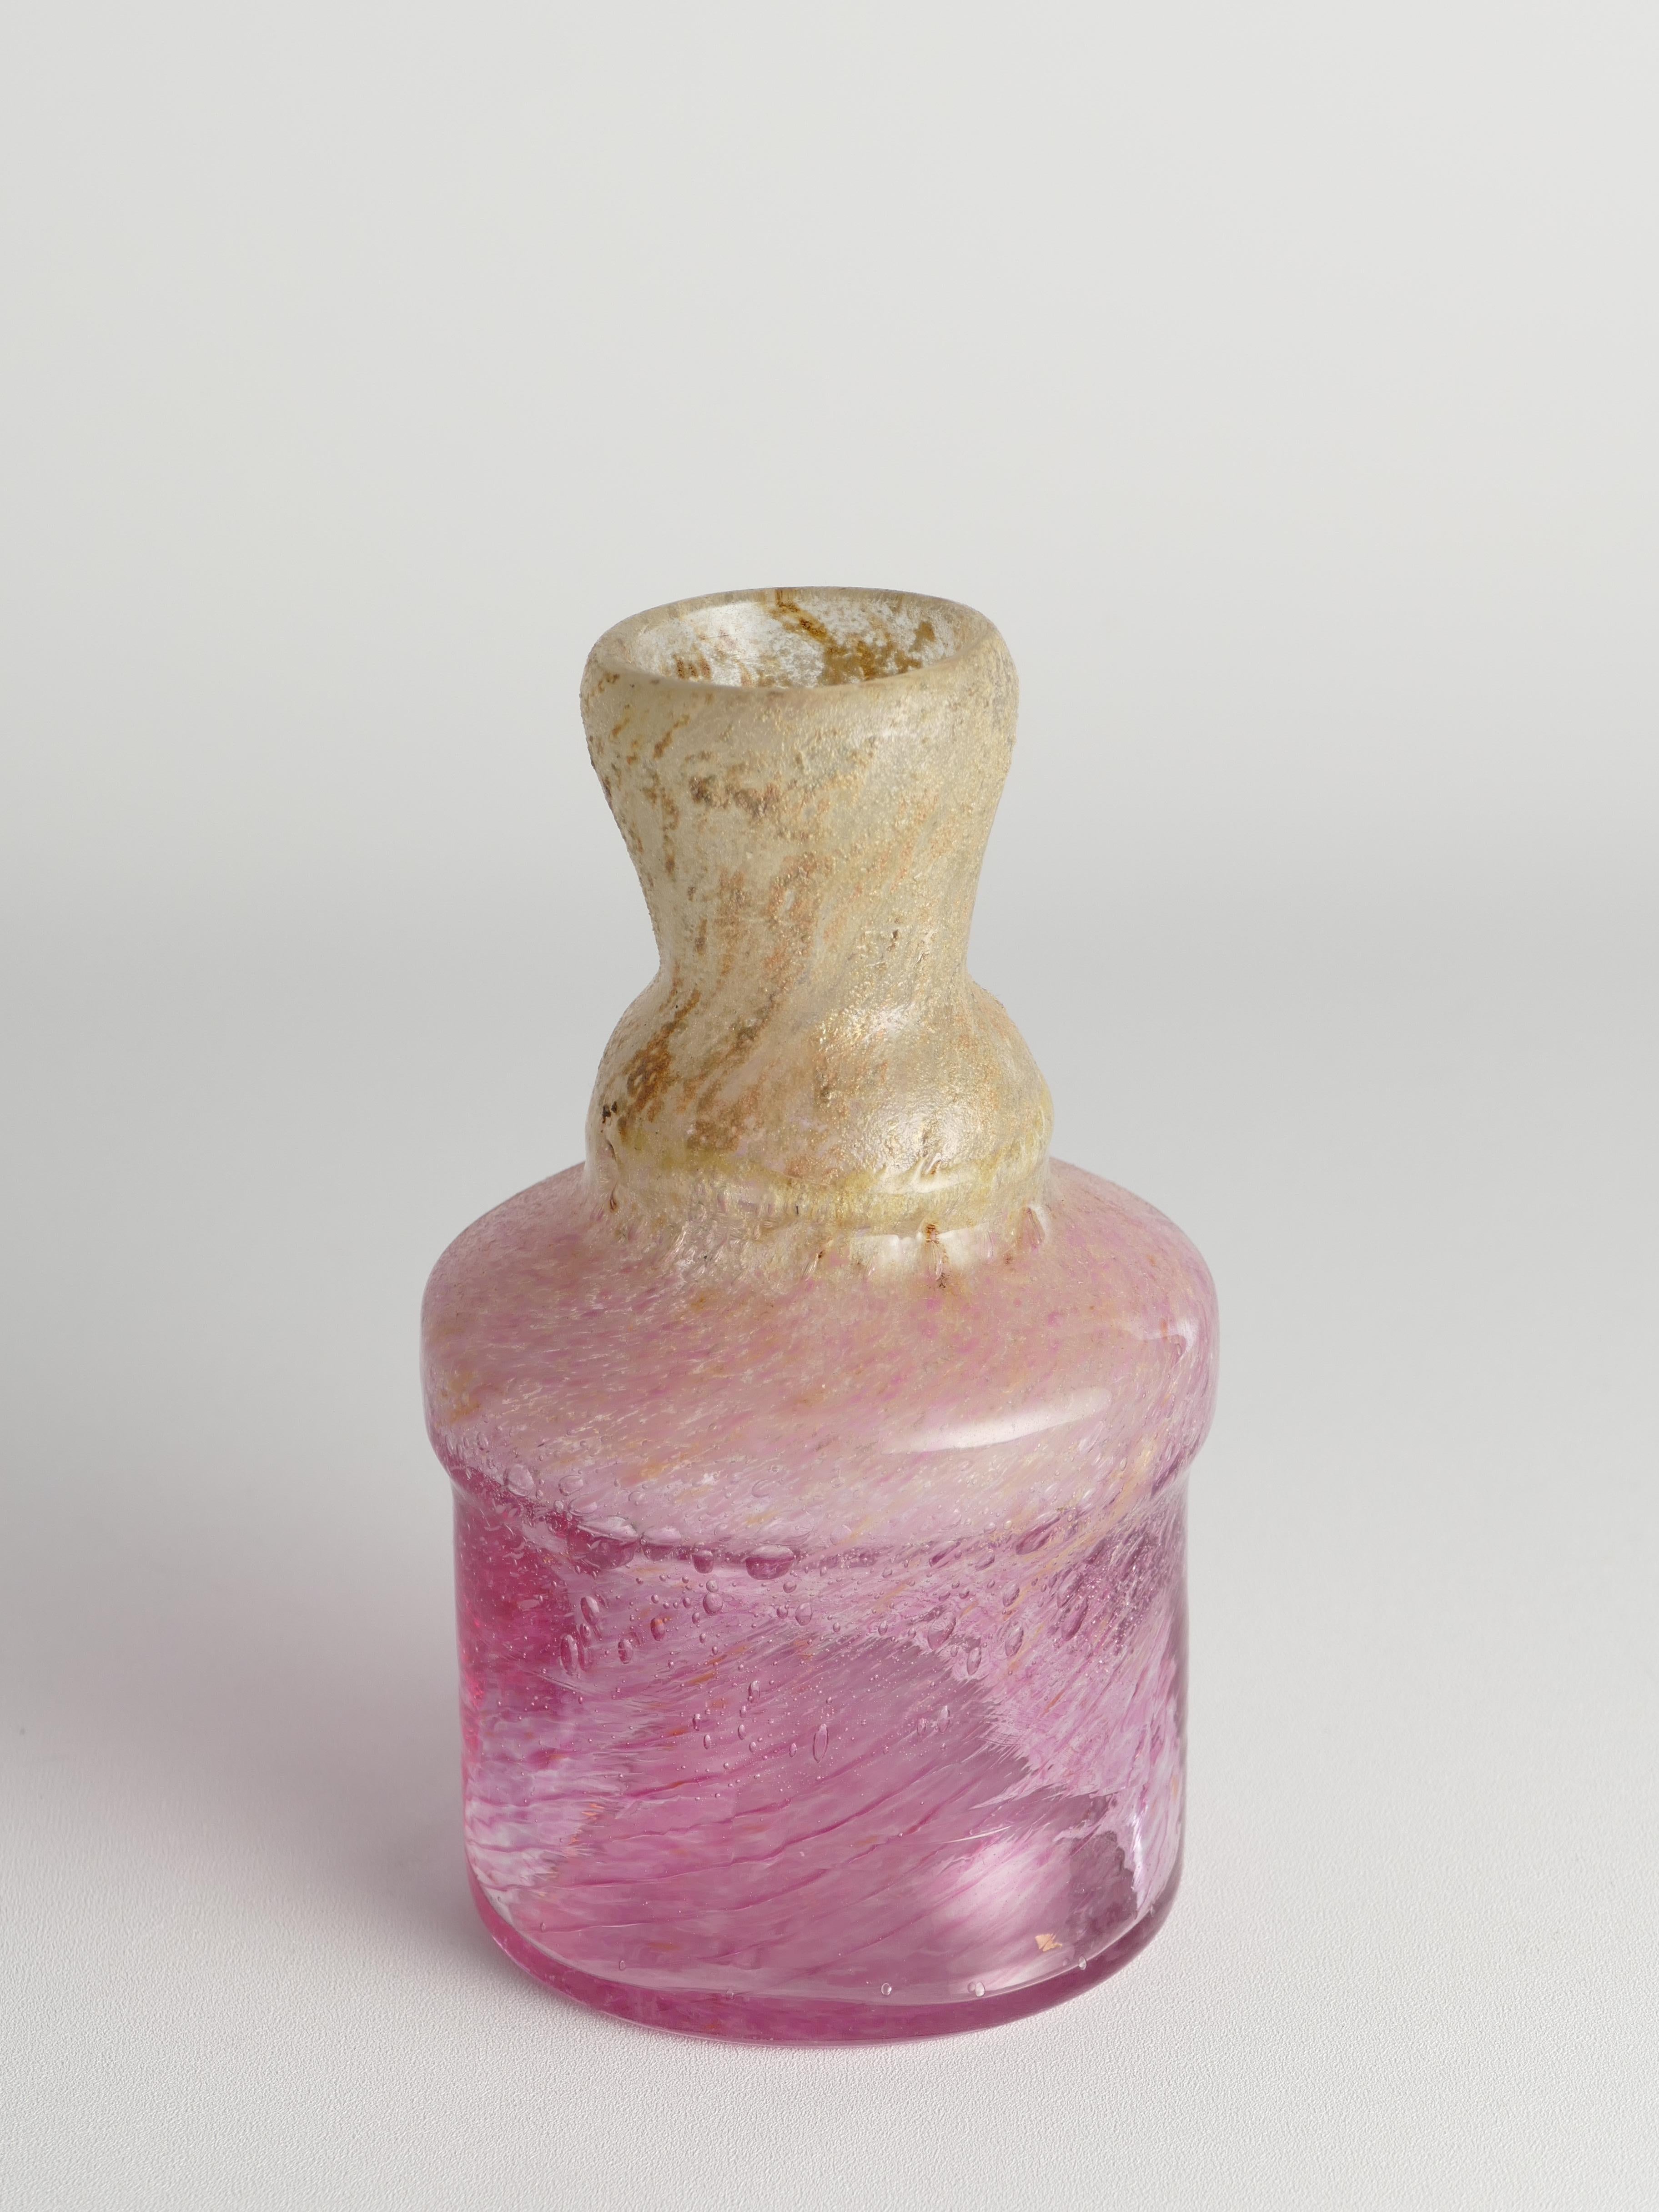 Unique Bubblegum Pink and Yellow Art Glass Vase by Milan Vobruba, Sweden 1980s For Sale 3